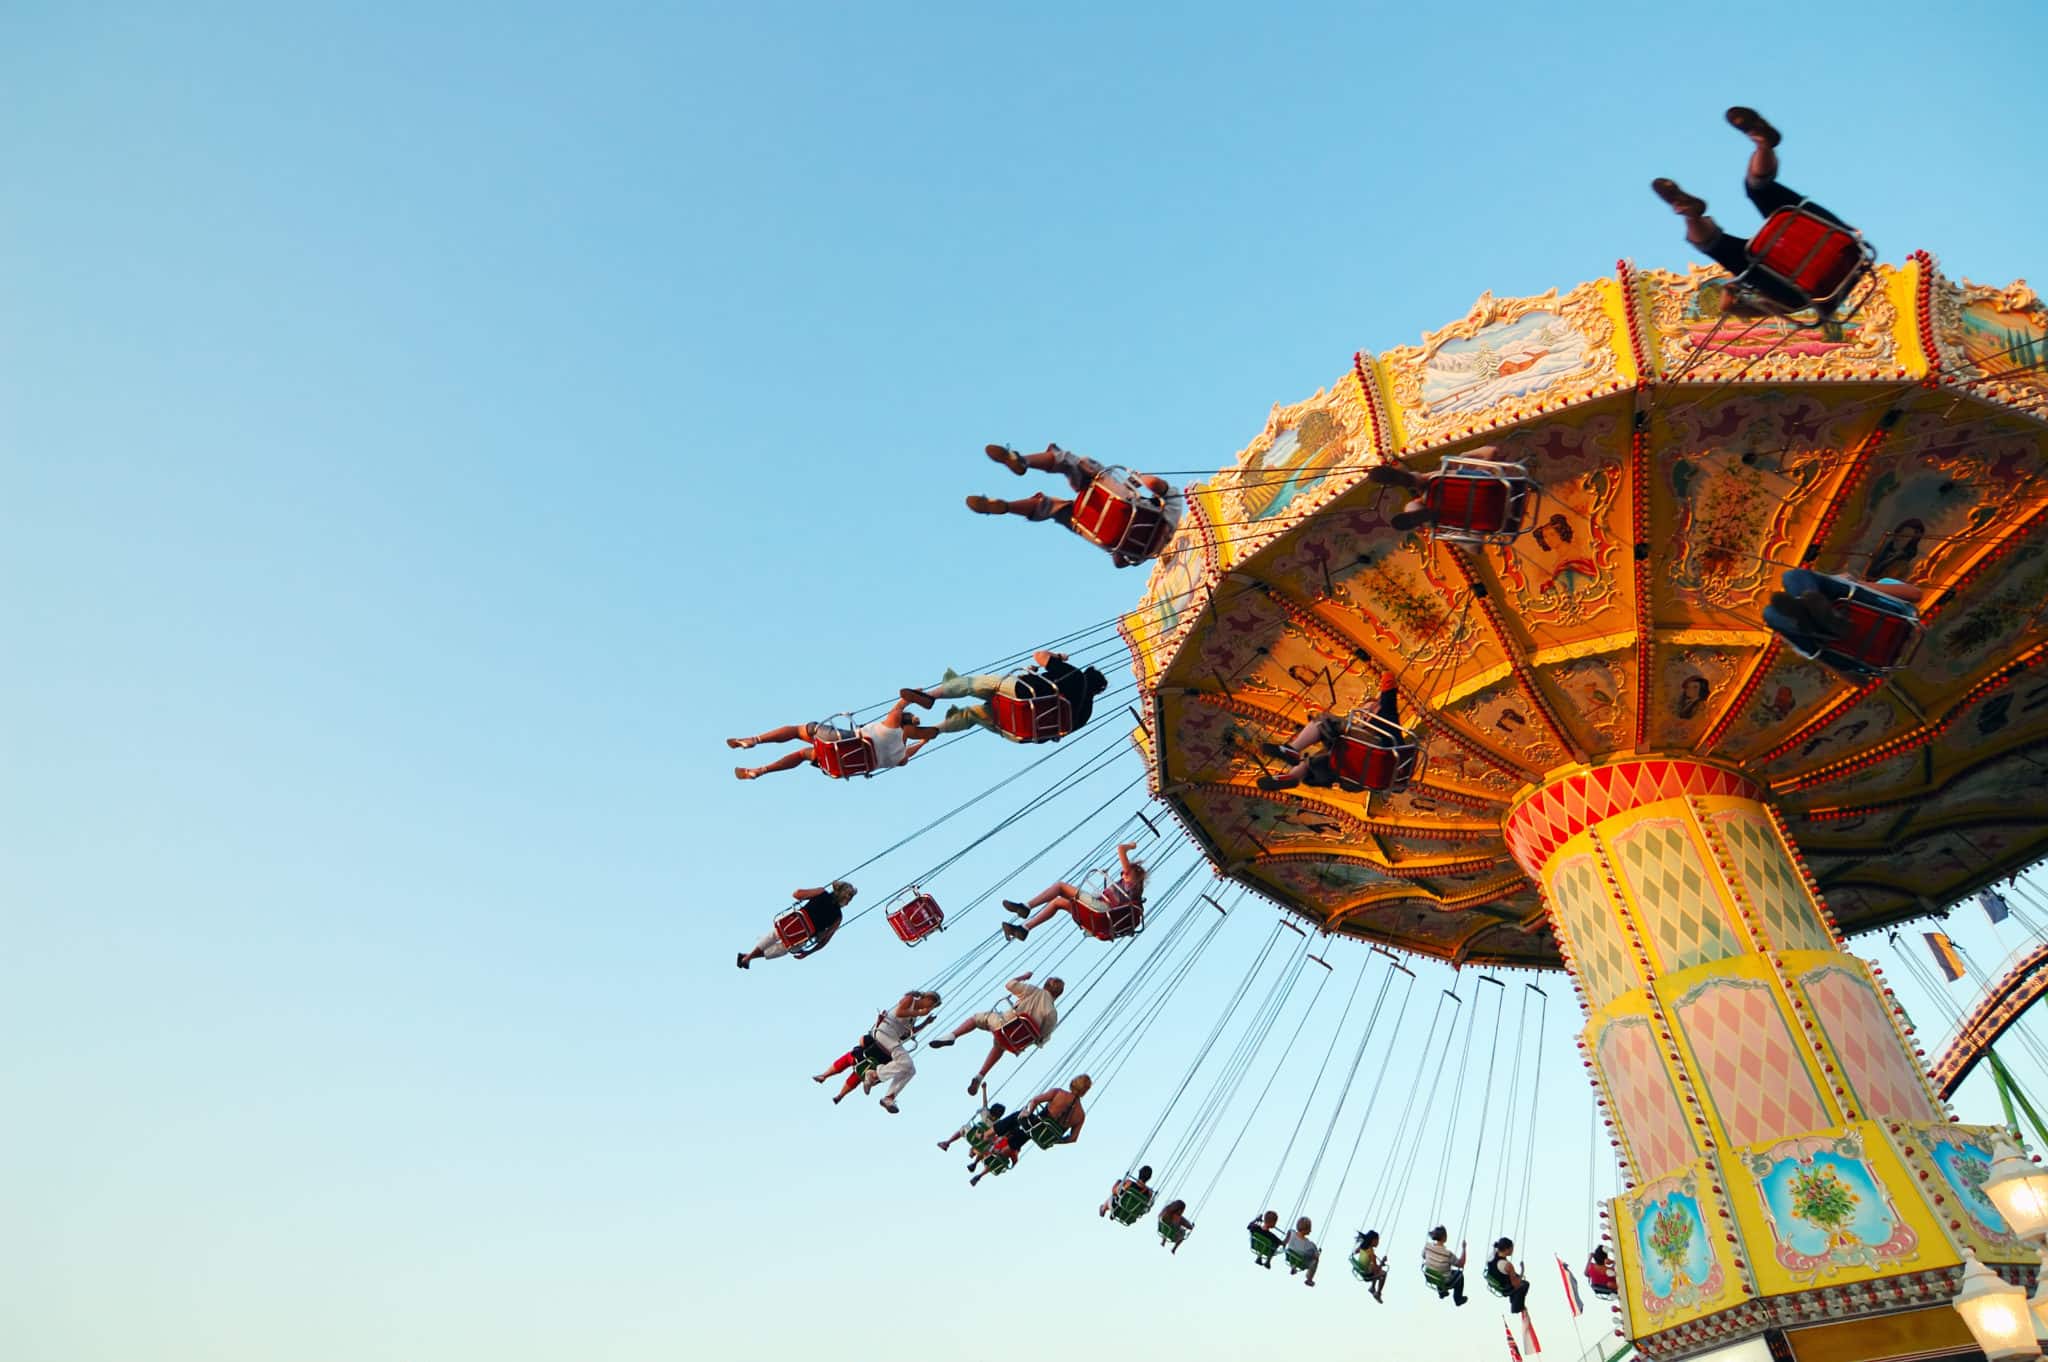 Lawsuits for Amusement Park Injuries